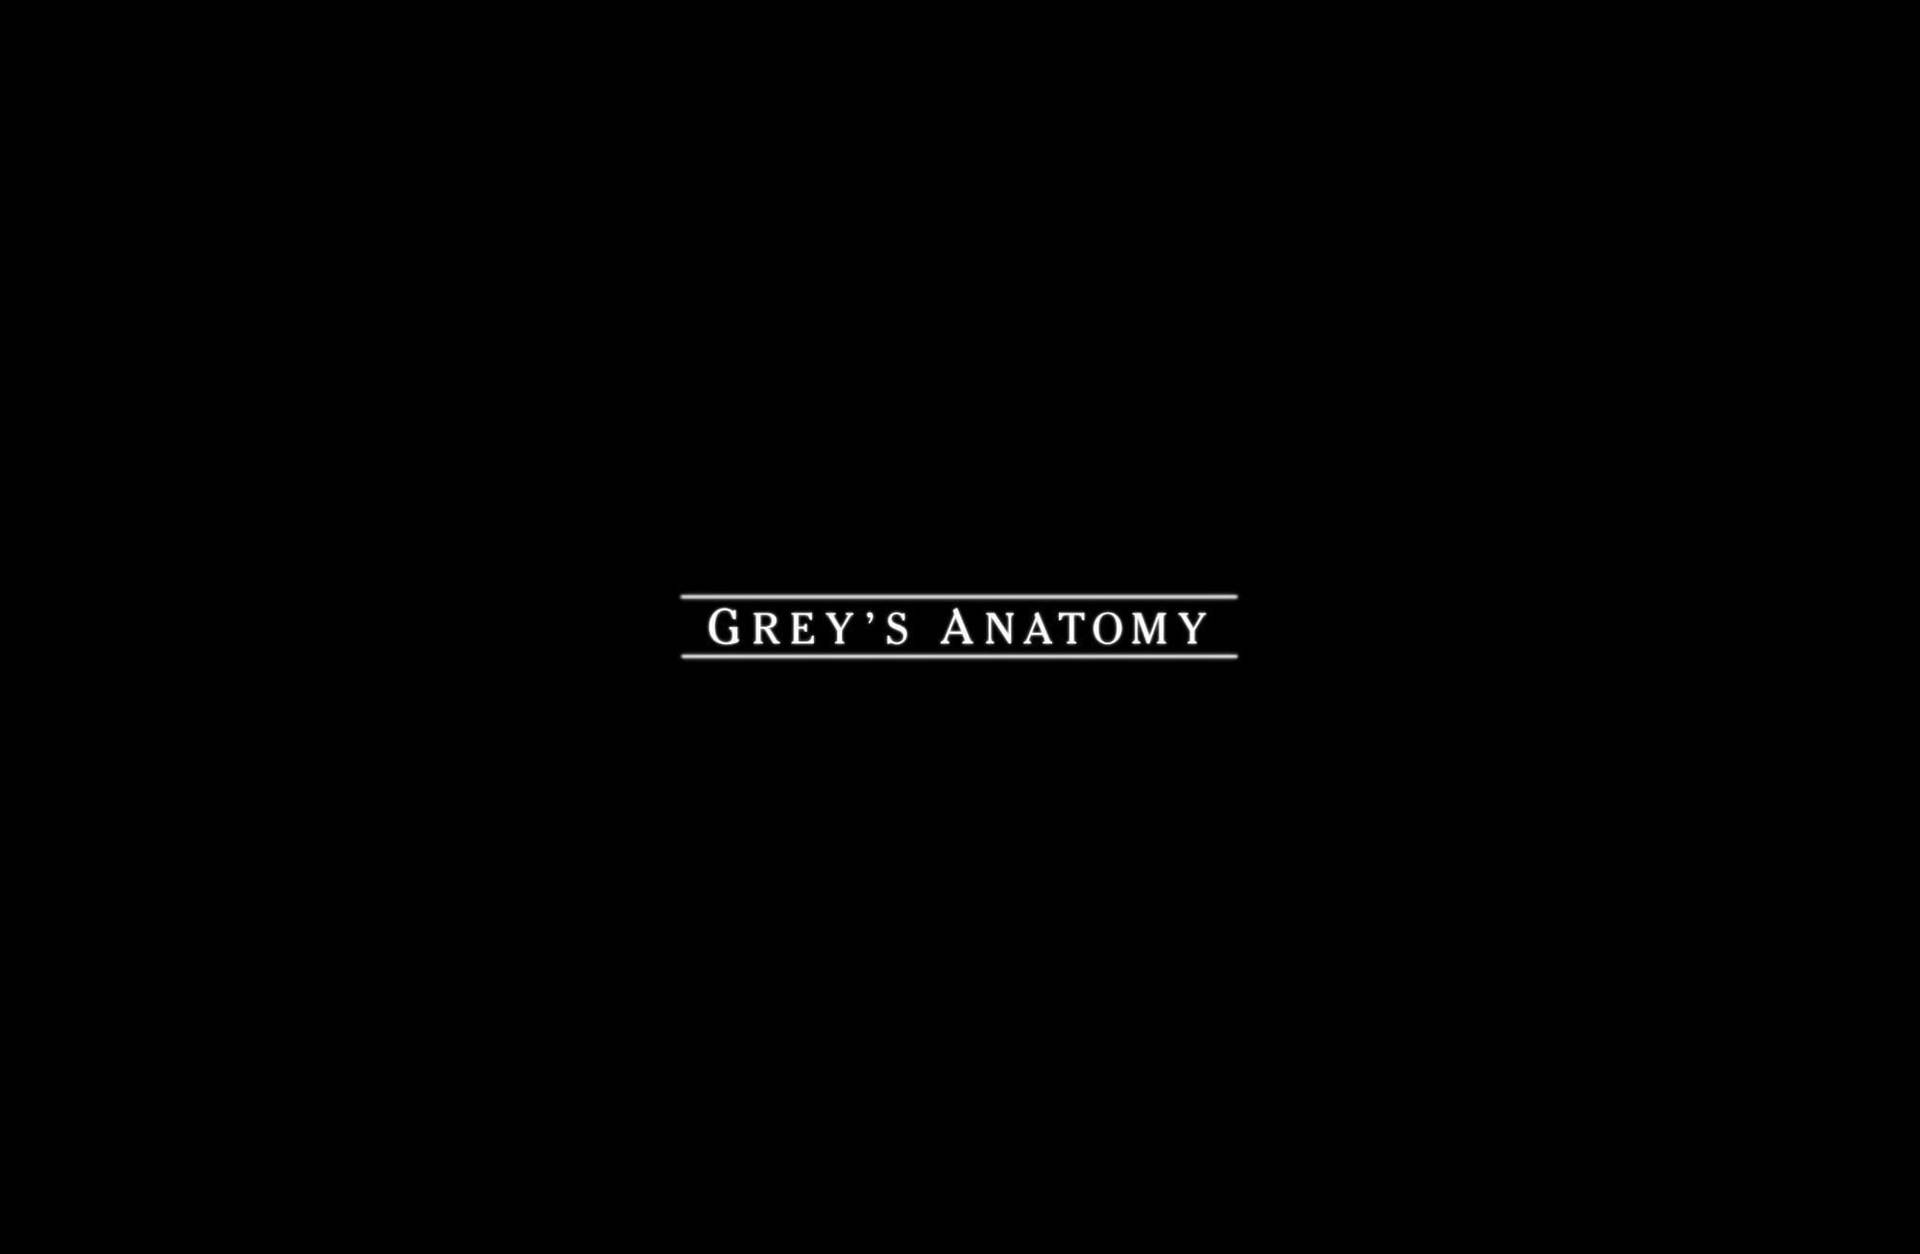 Grey's Anatomy Opening Title Background